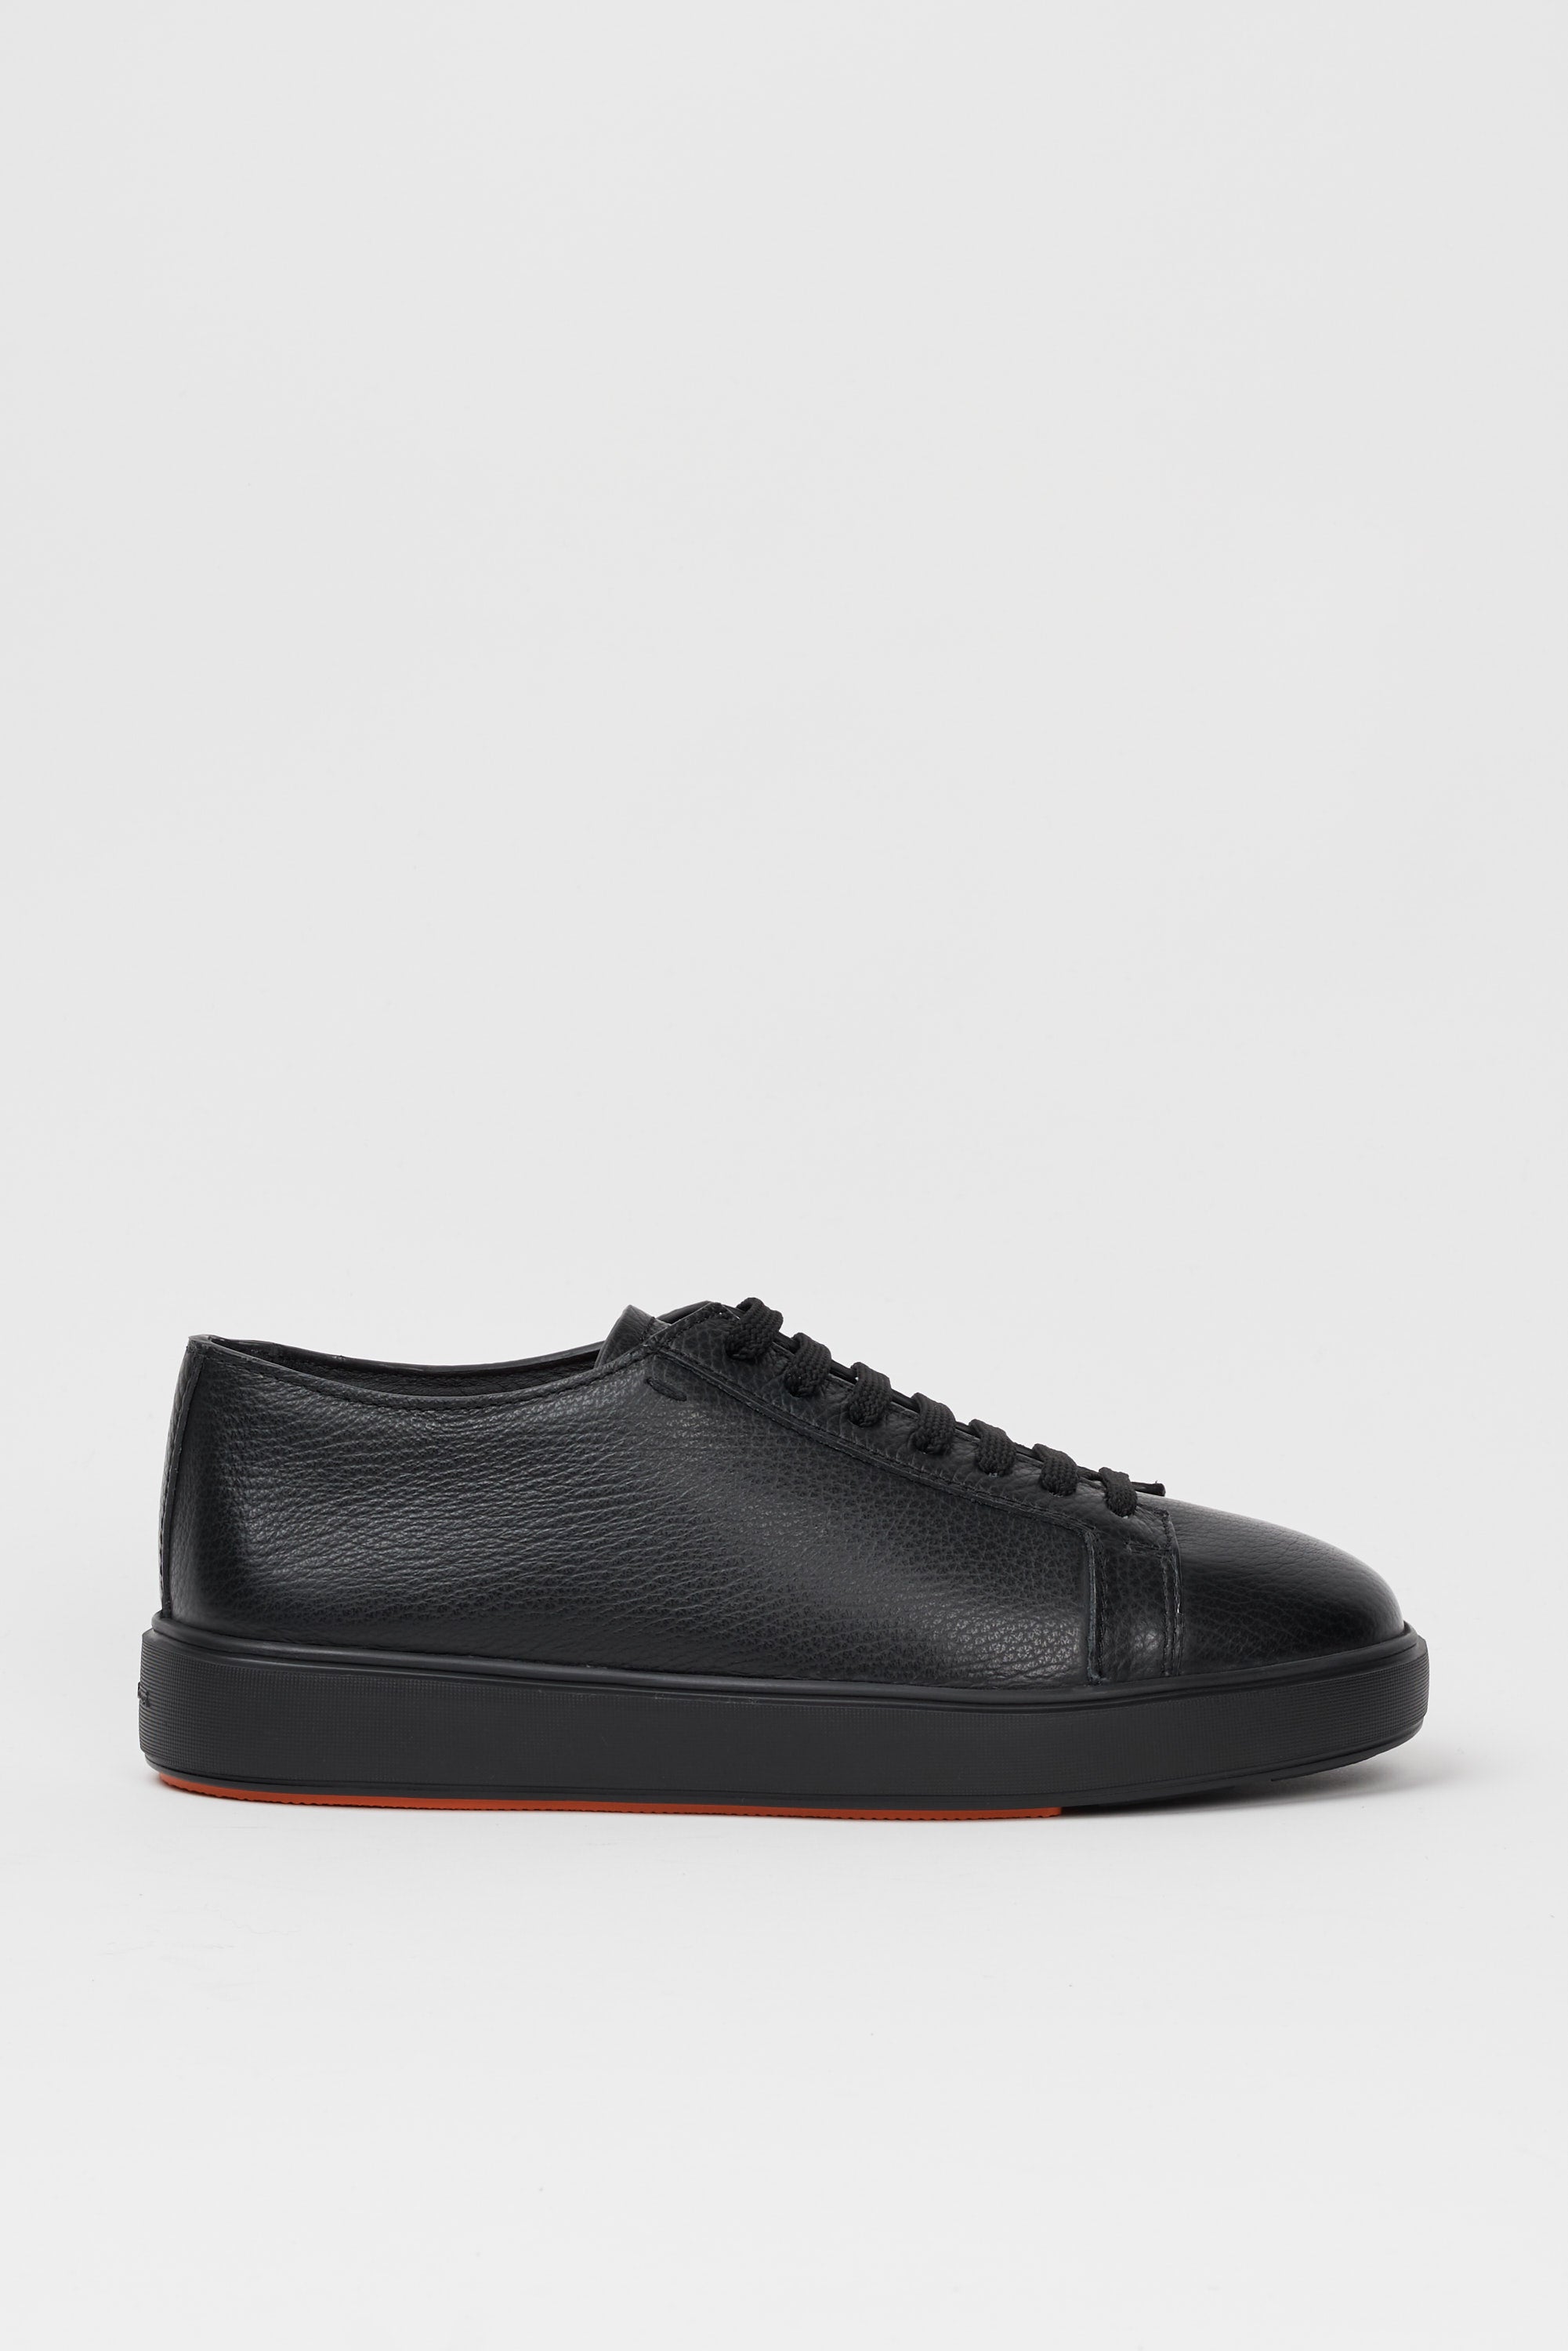 Santoni Leather Sneakers Black - 1